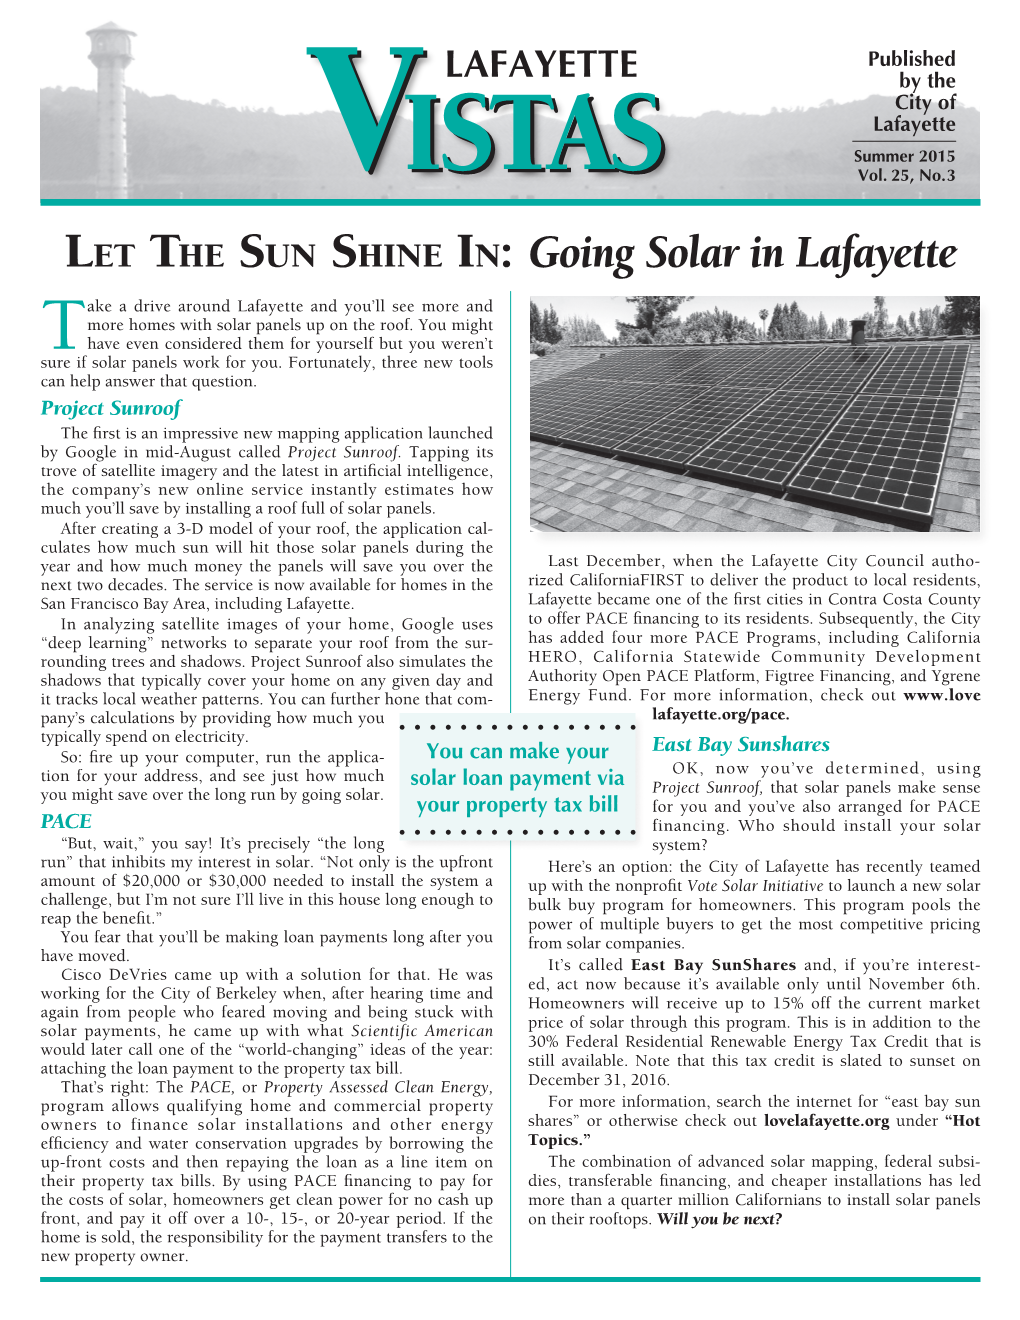 Going Solar in Lafayette